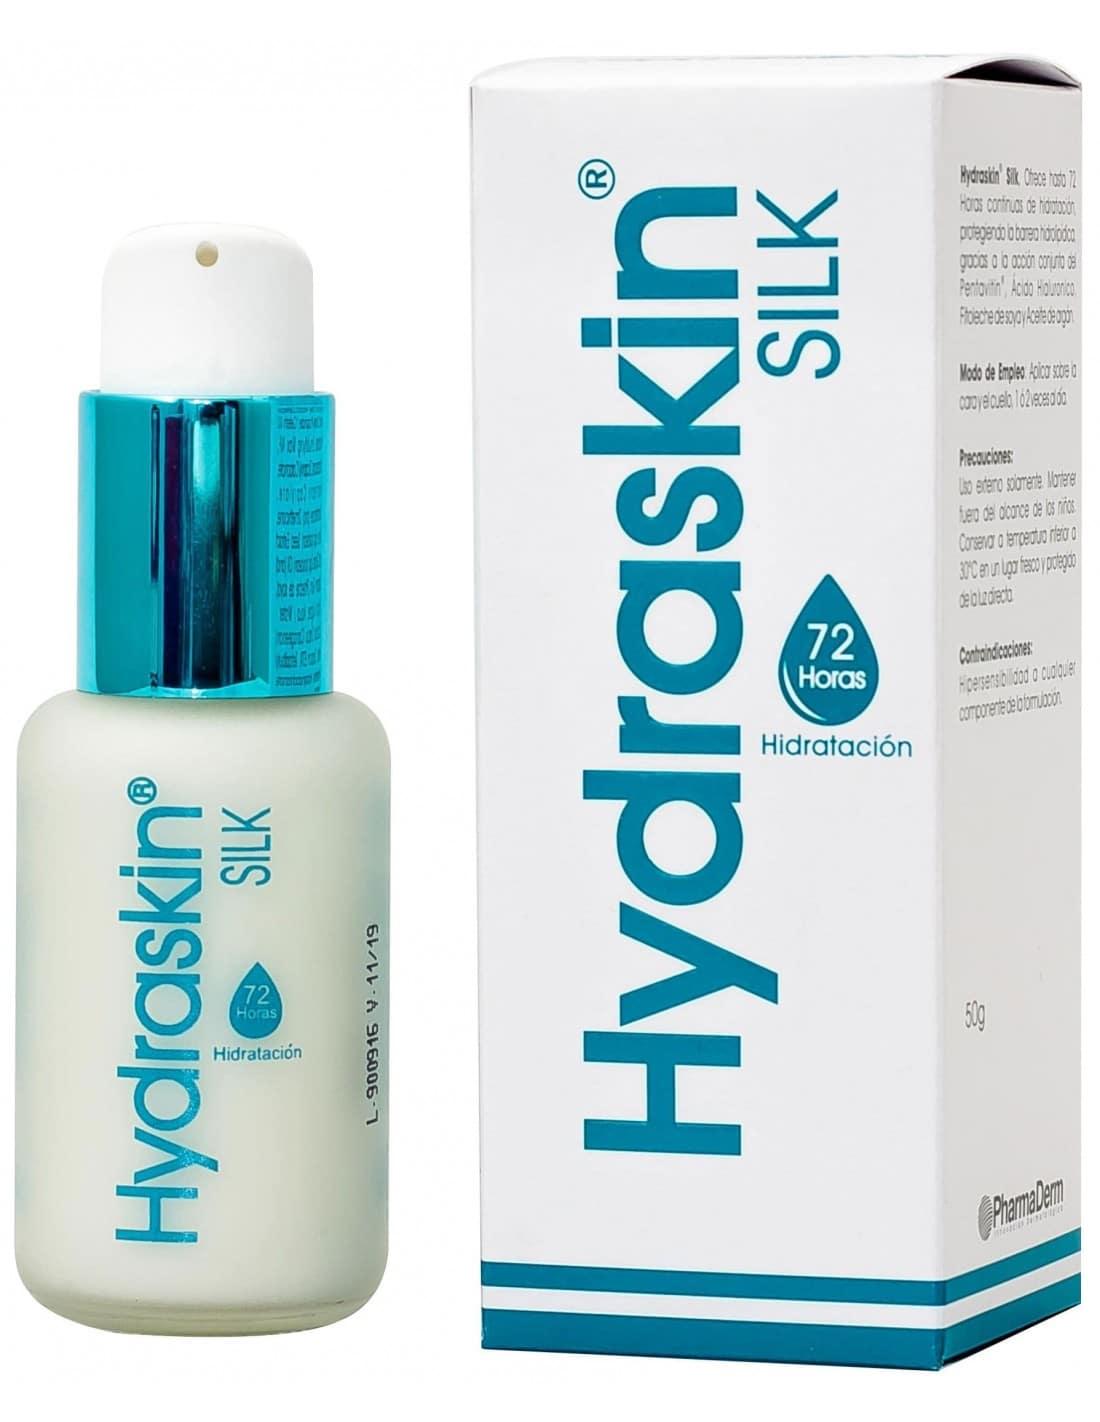 Hydraskin Silk Emulgel 50g PHARMADERM® - LASKIN